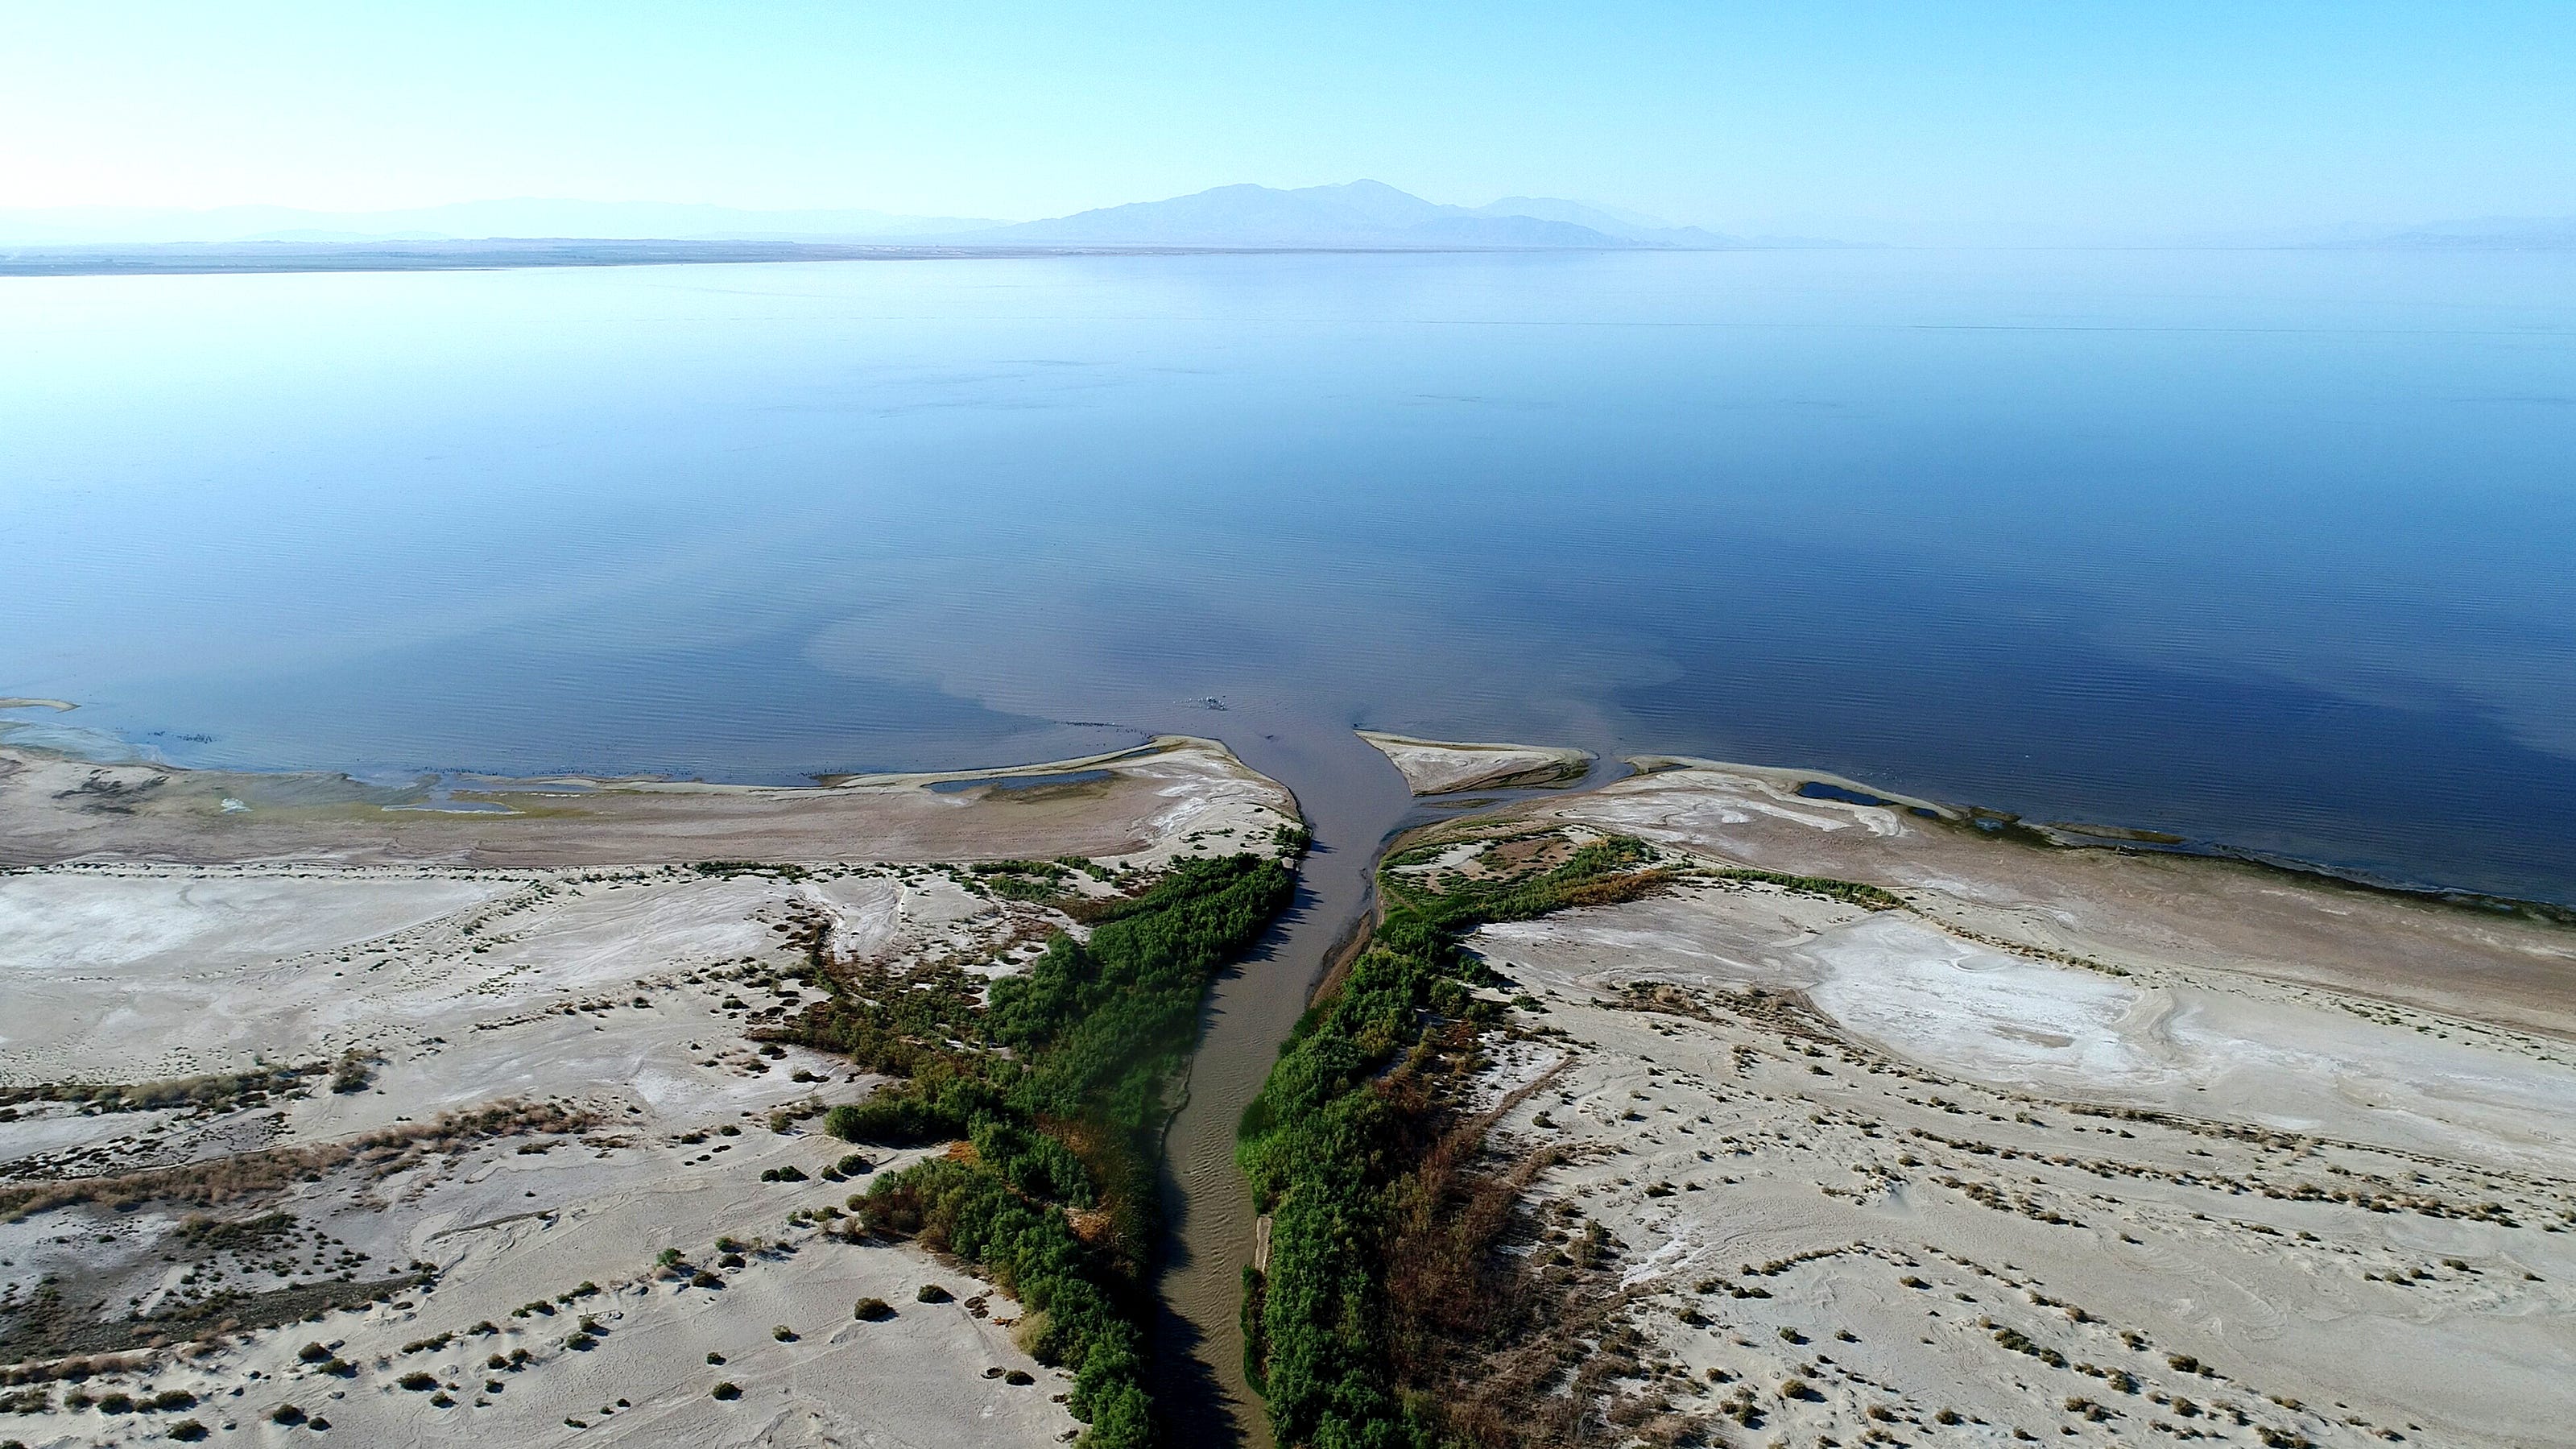 California water district wants 200M for Salton Sea for Colorado River